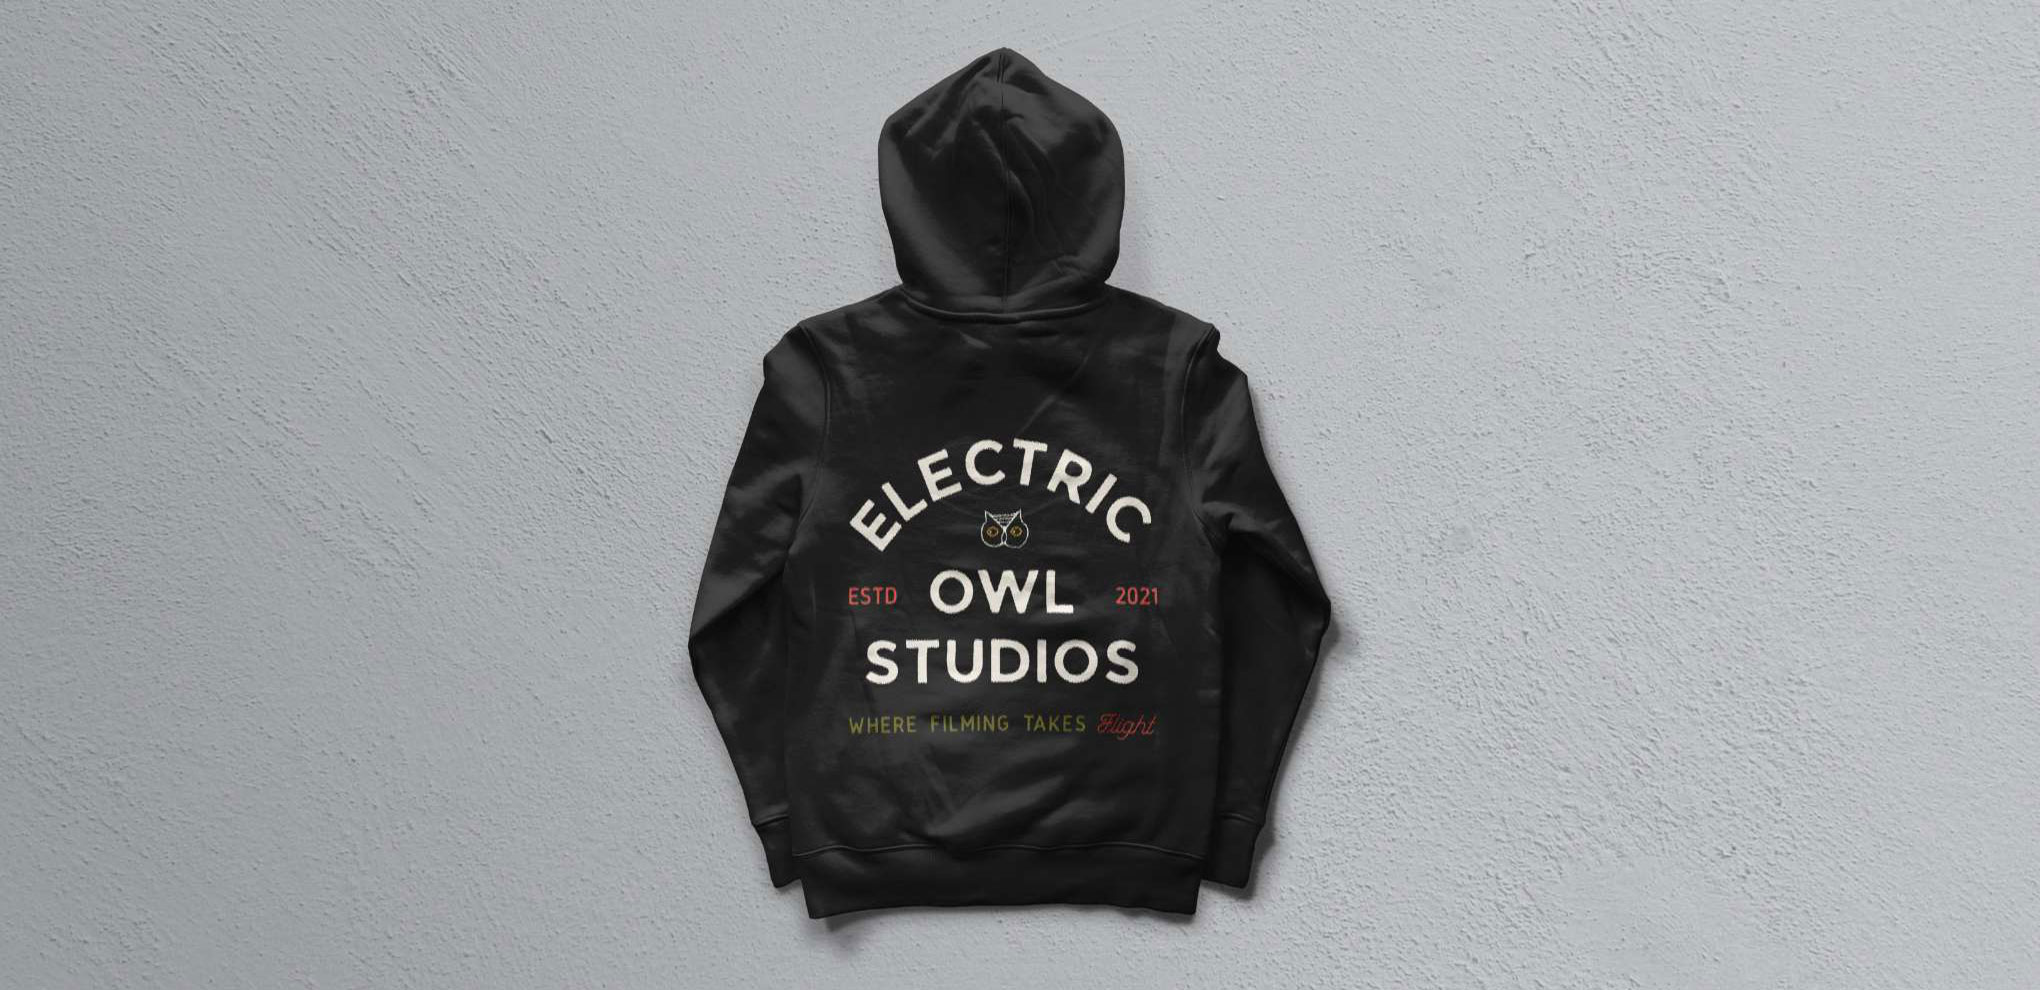 Electric Owl Studios